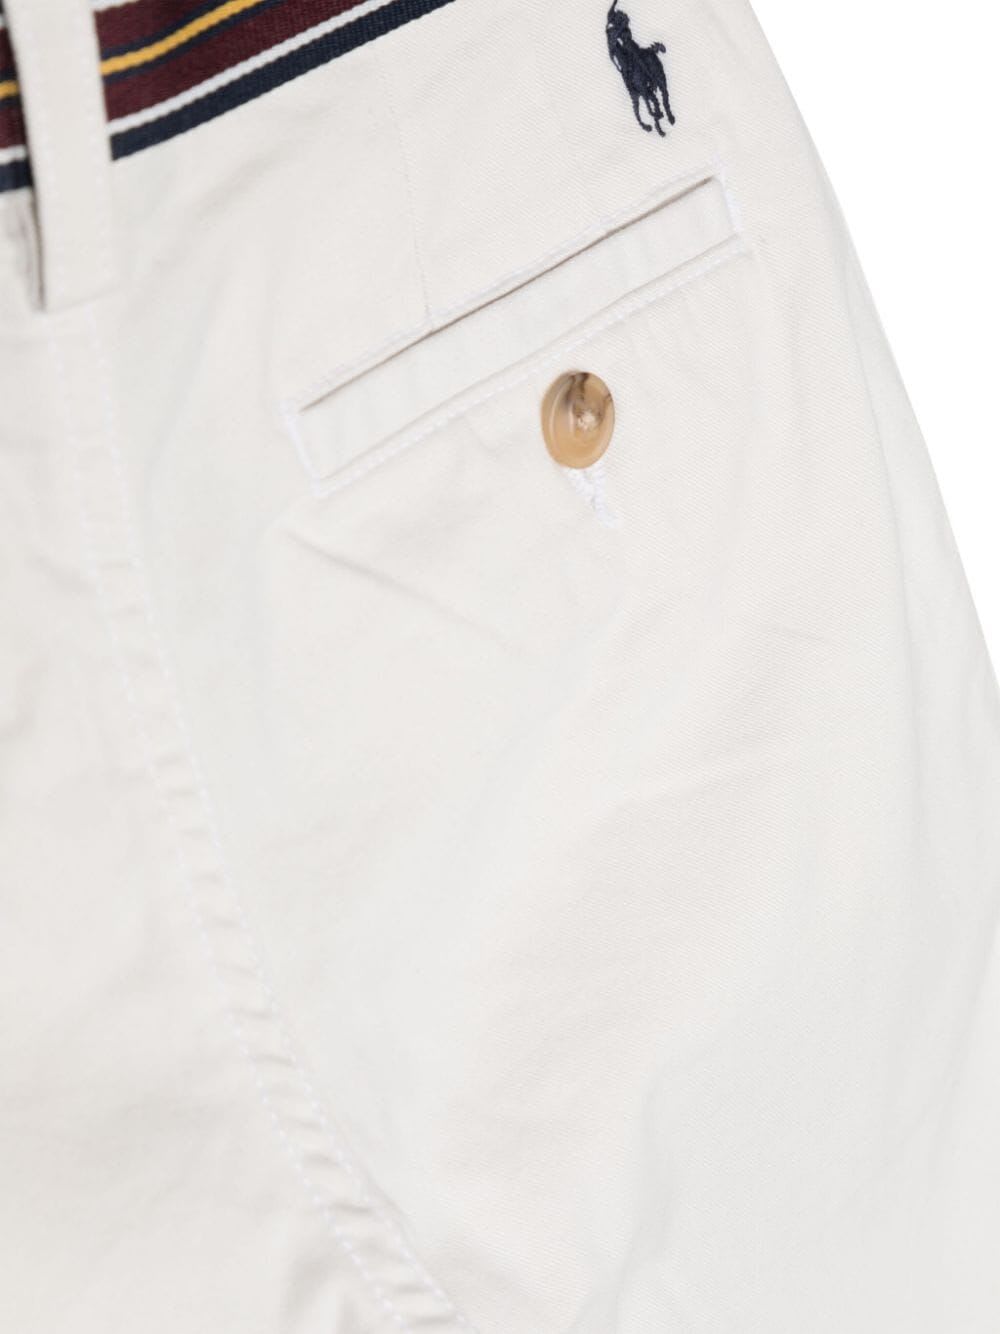 Shop Polo Ralph Lauren Bedford Shrt Shorts Flat Front In Deckwash White